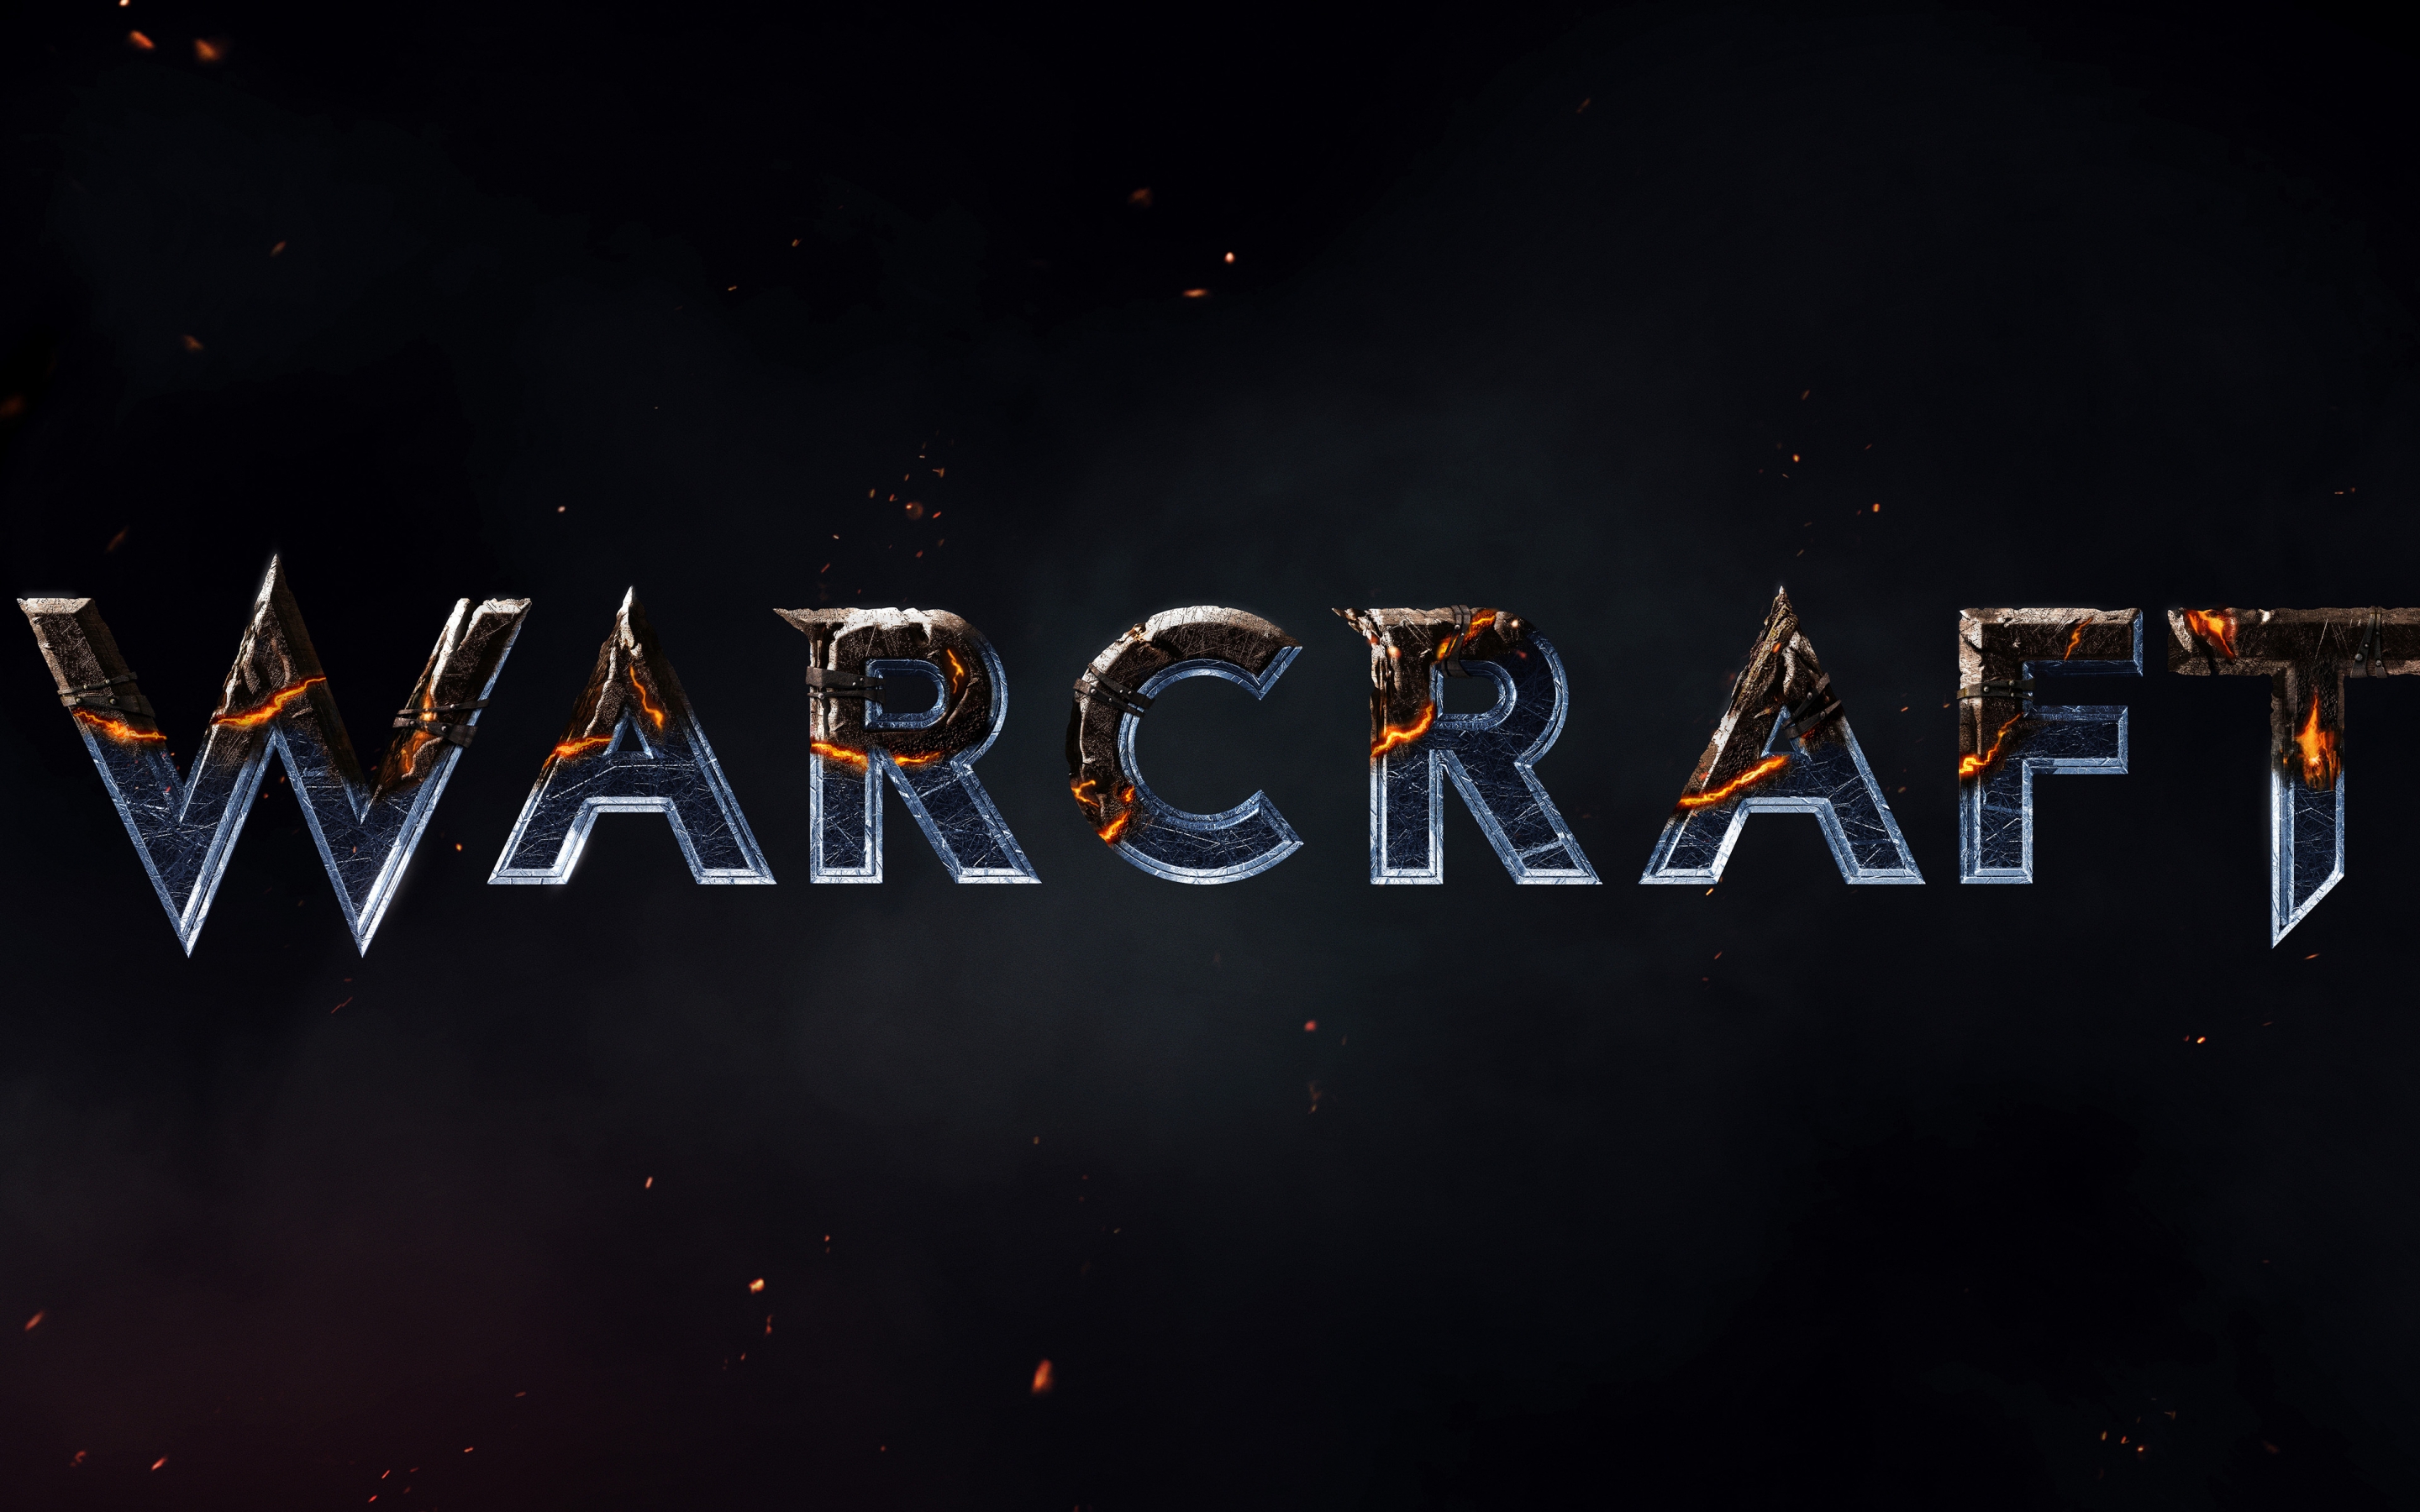 Warcraft Movie 2016 for 2880 x 1800 Retina Display resolution